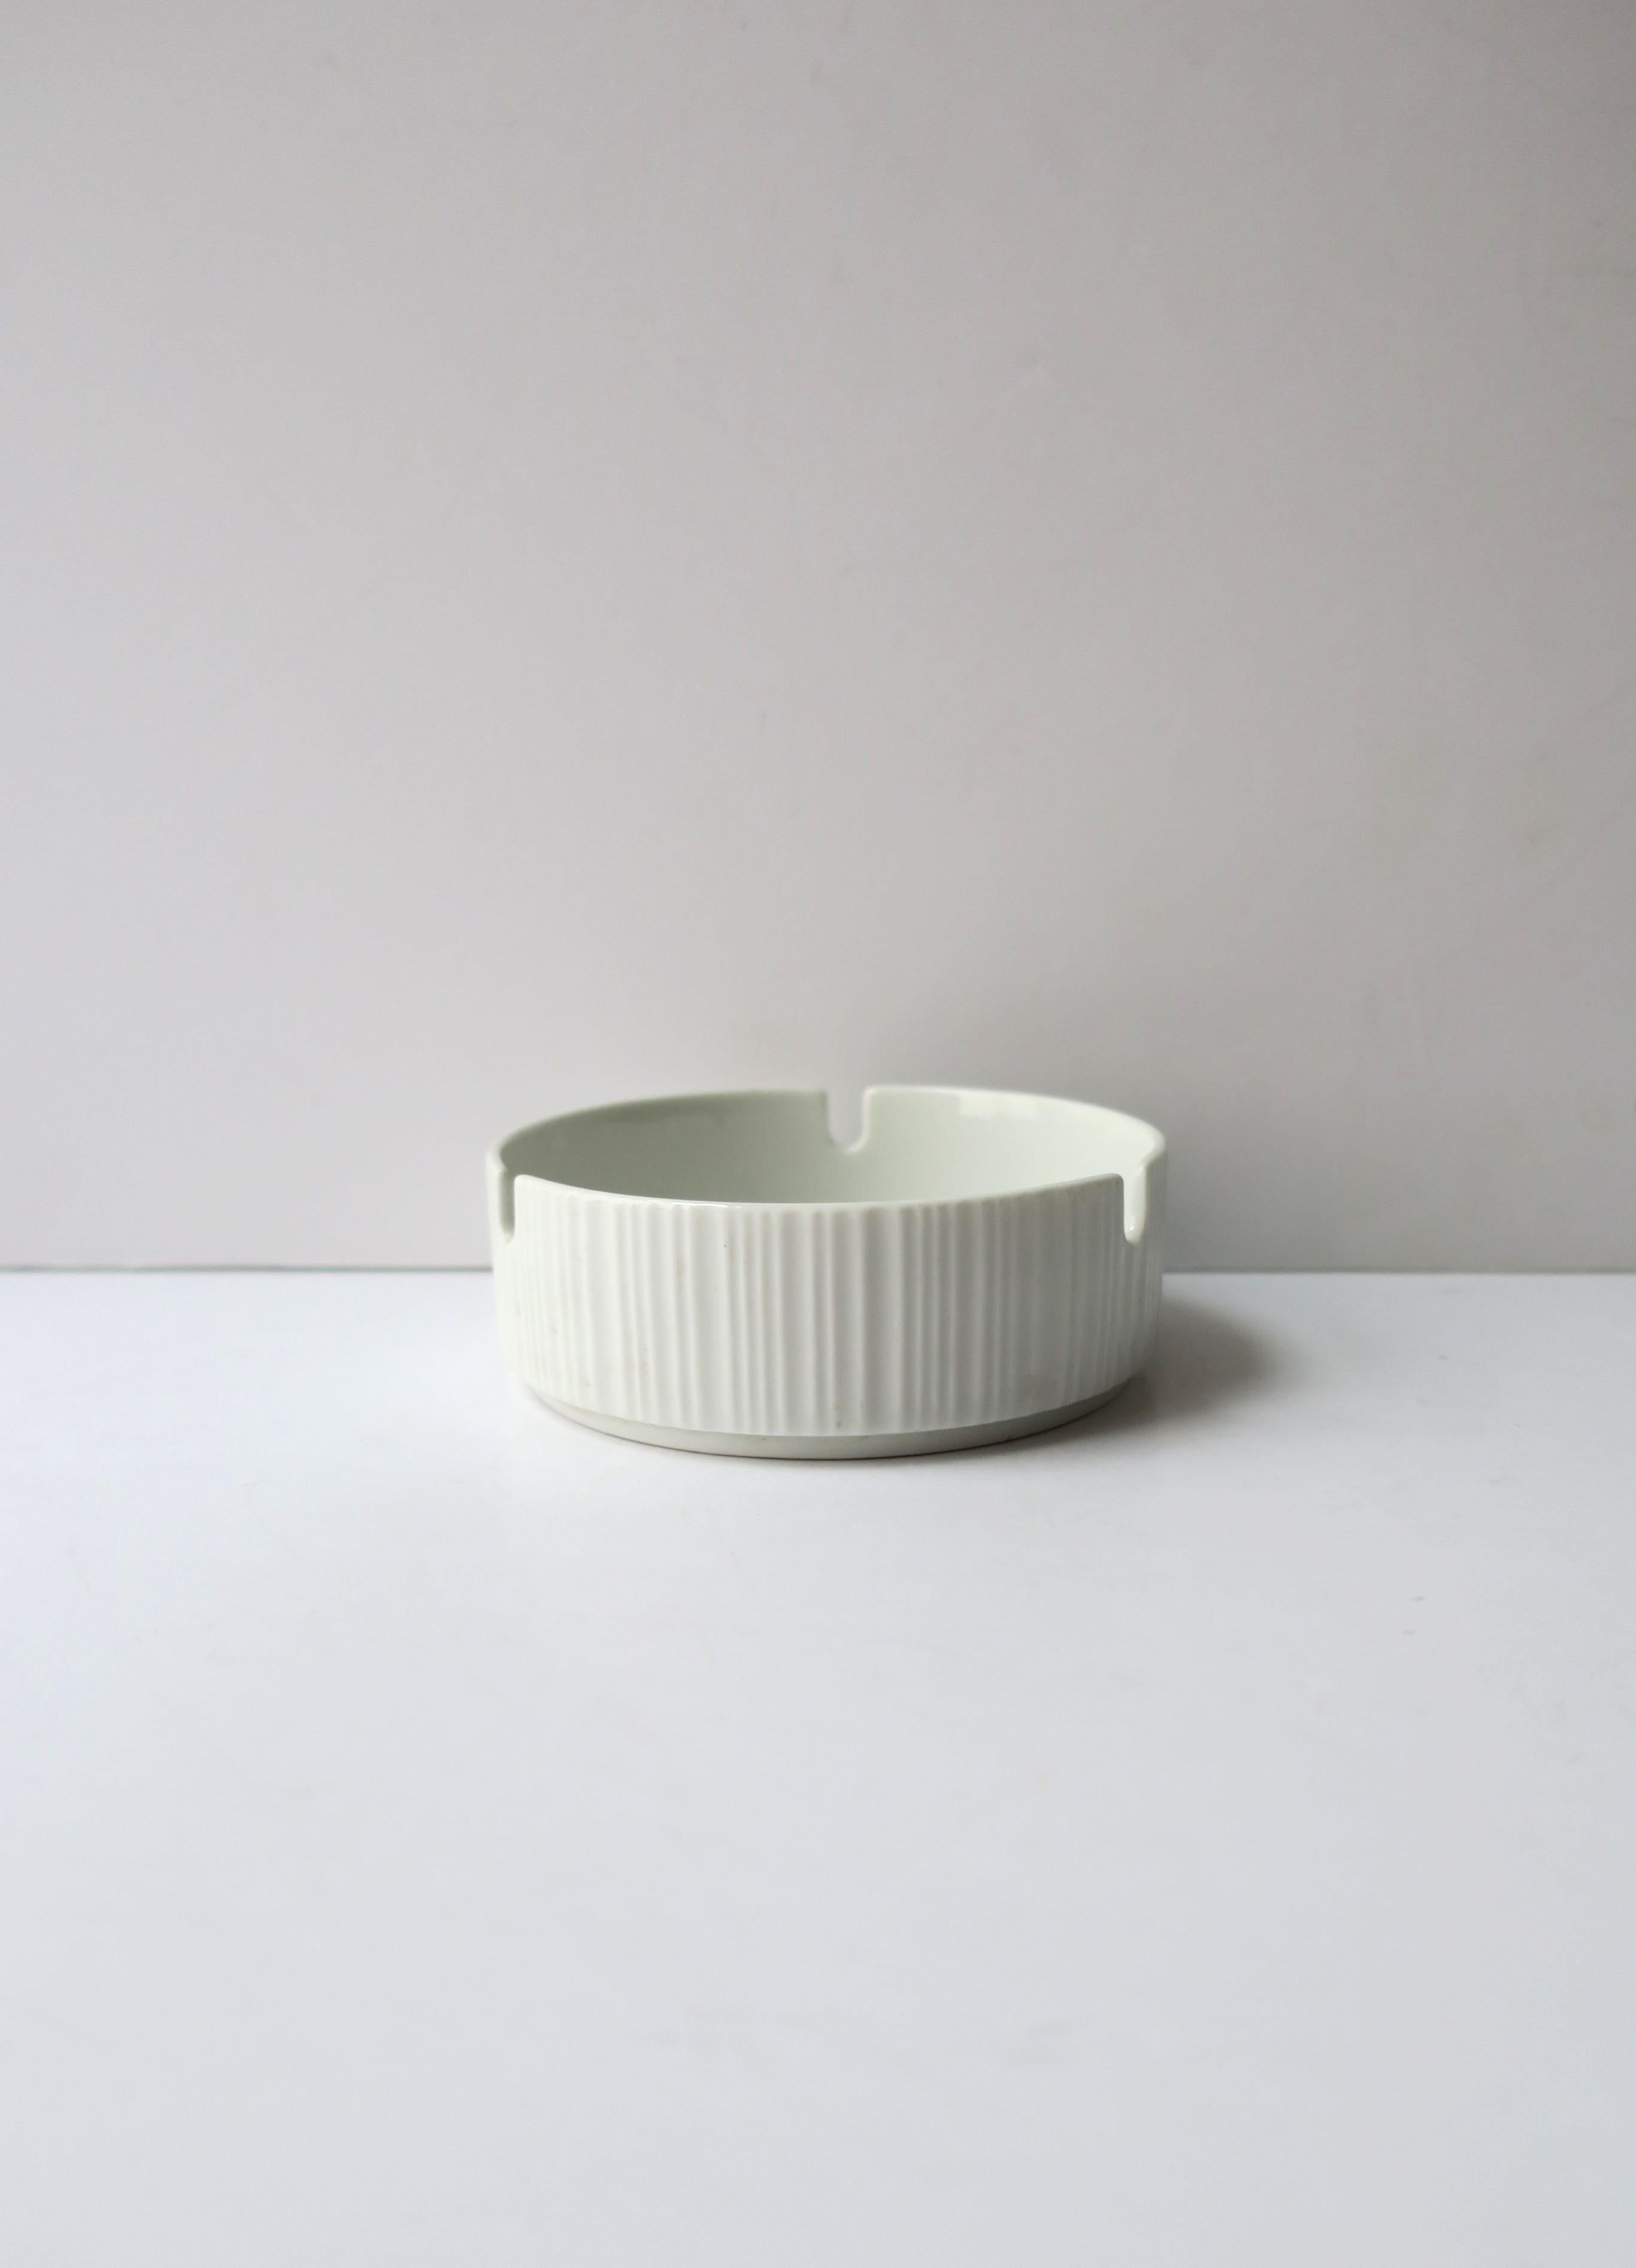 Porcelain Midcentury Modern Rosenthal Studio Line Ashtray Catchall Tapio Wirkkala For Sale